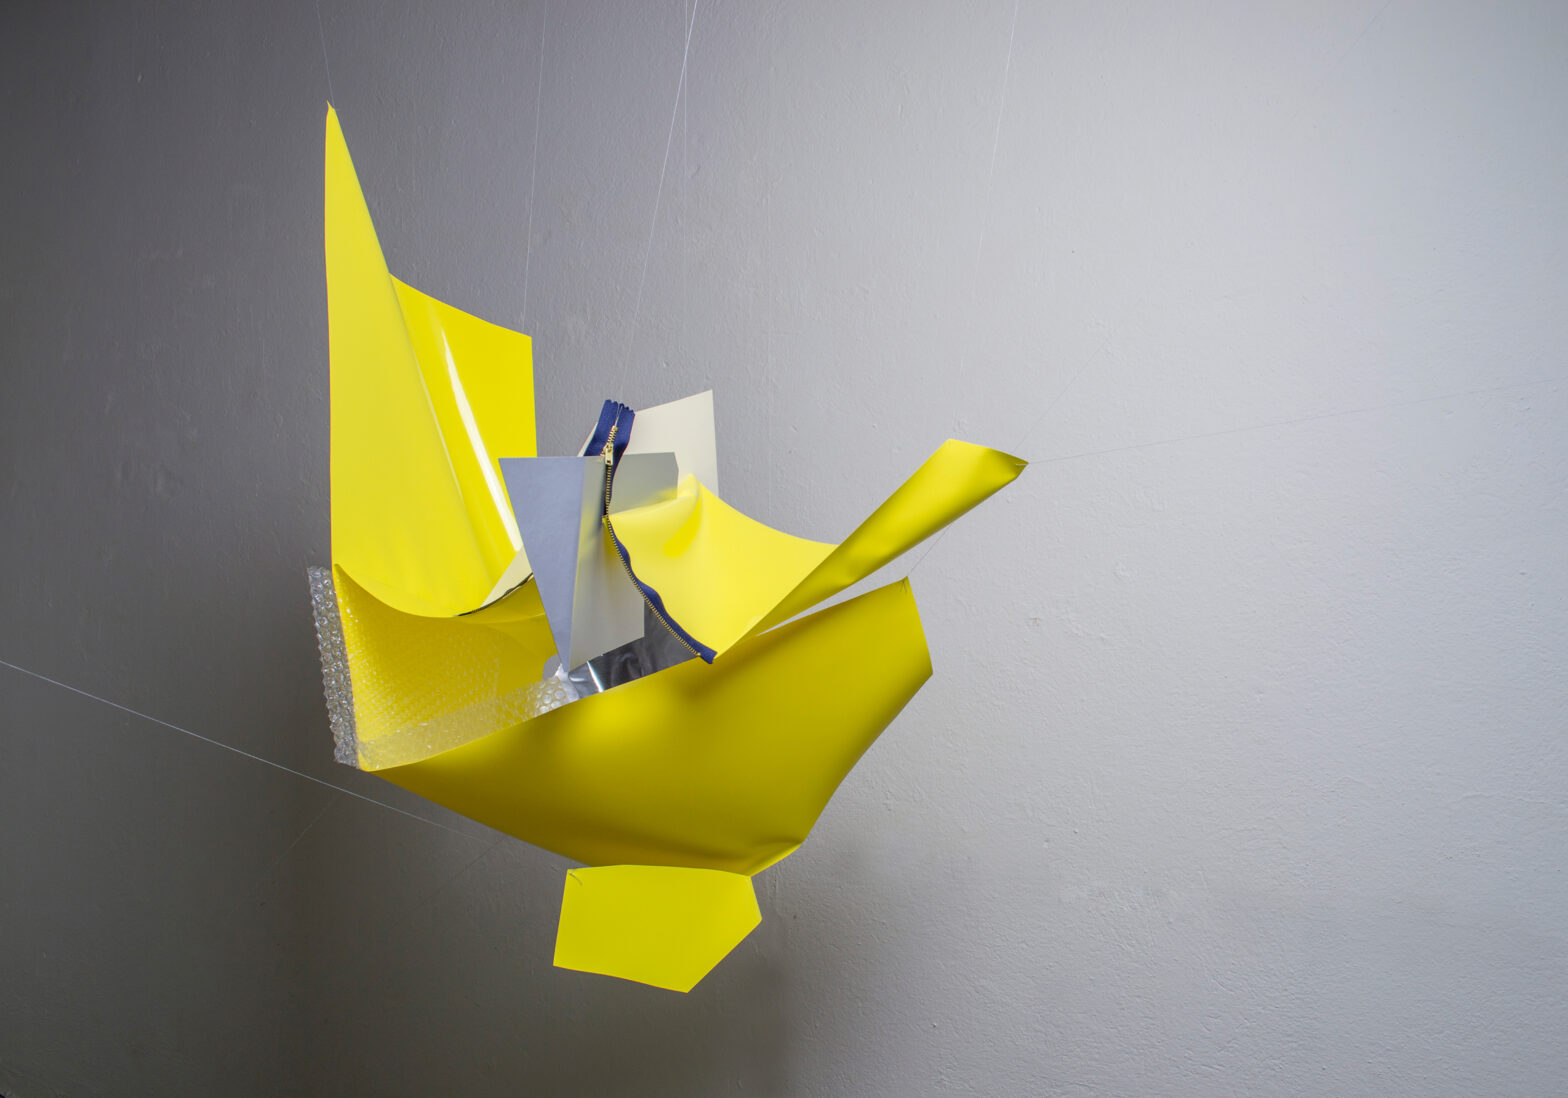 Untitled (shiny yellow thing), 2014